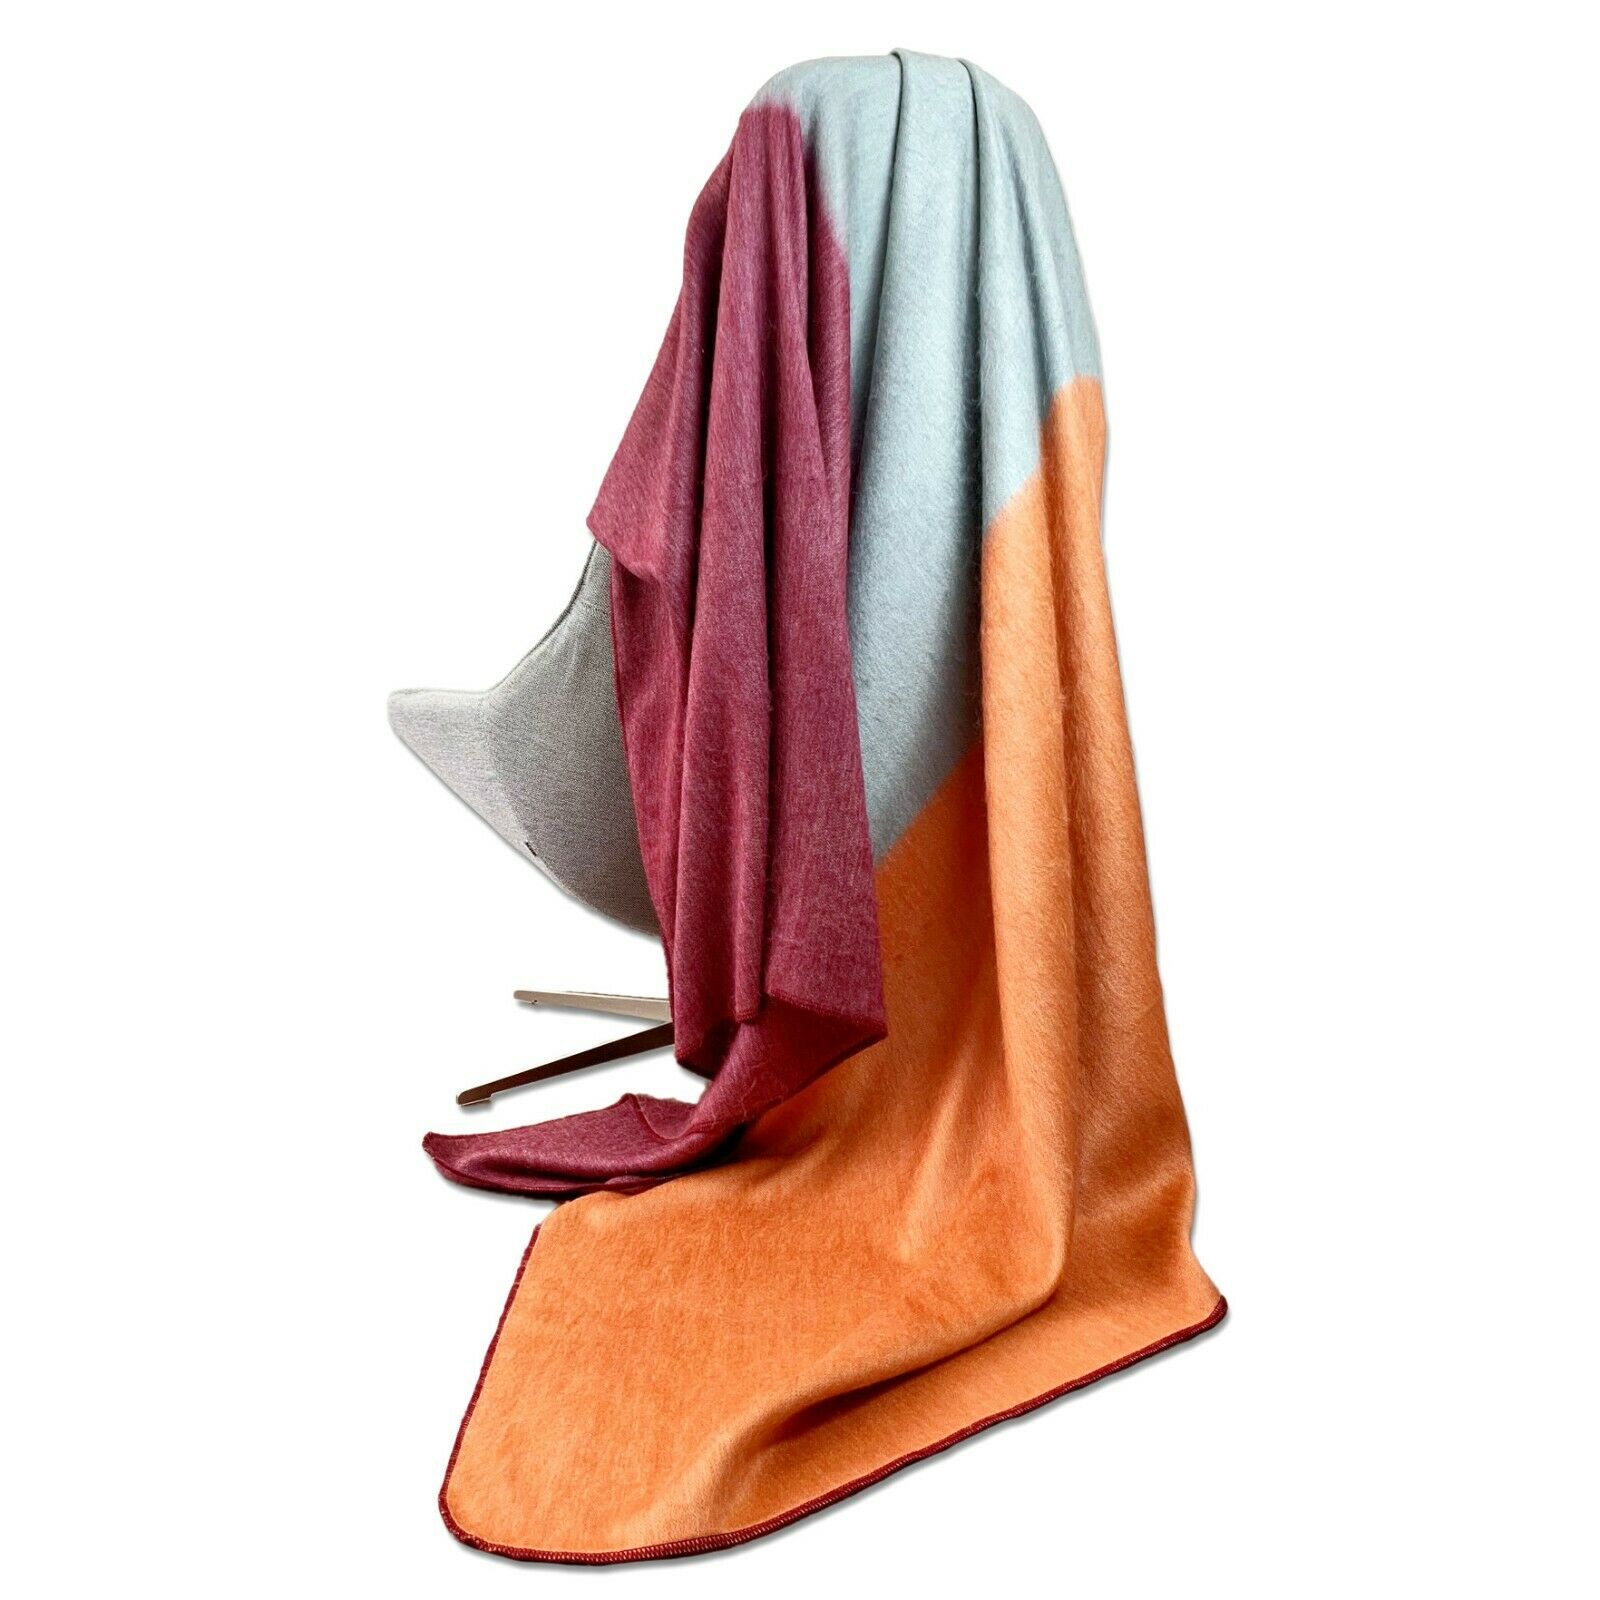 Cuchihuasi - Baby Alpaca Wool Throw Blanket / Sofa Cover - Queen 98" x 63" - Burgundy/Gray/Orange